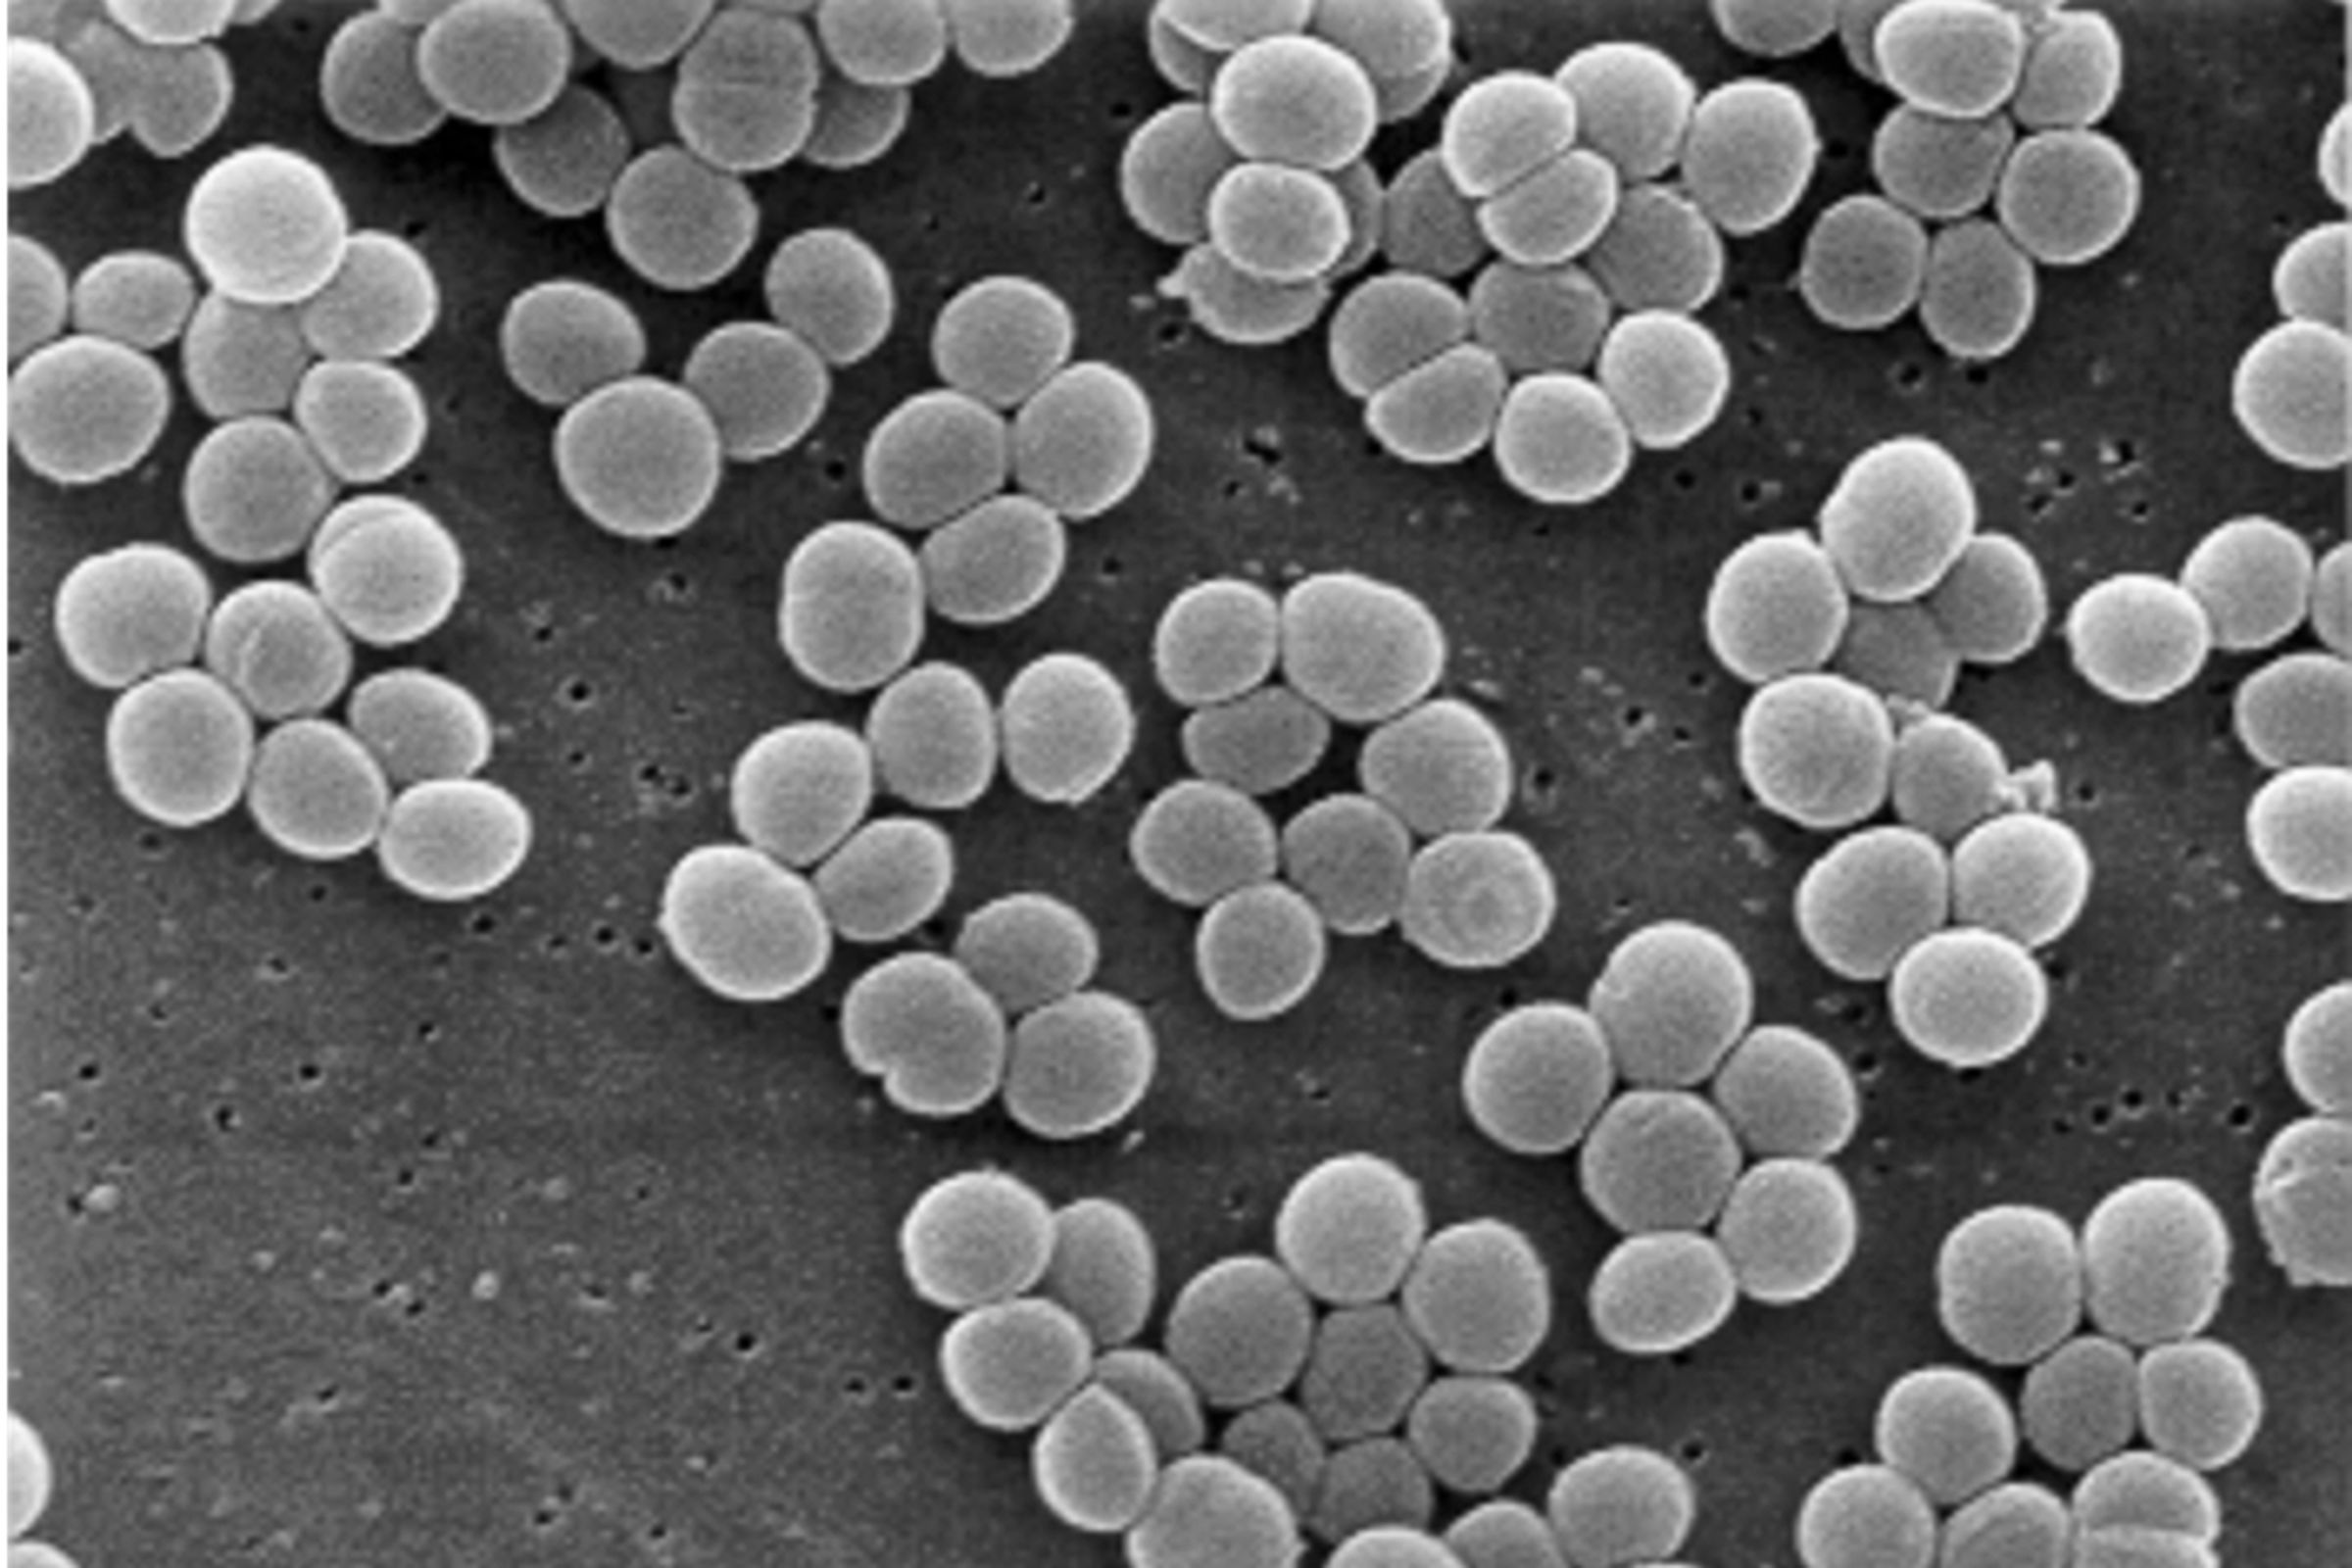 Staphylococcus superbug (wikimedia)